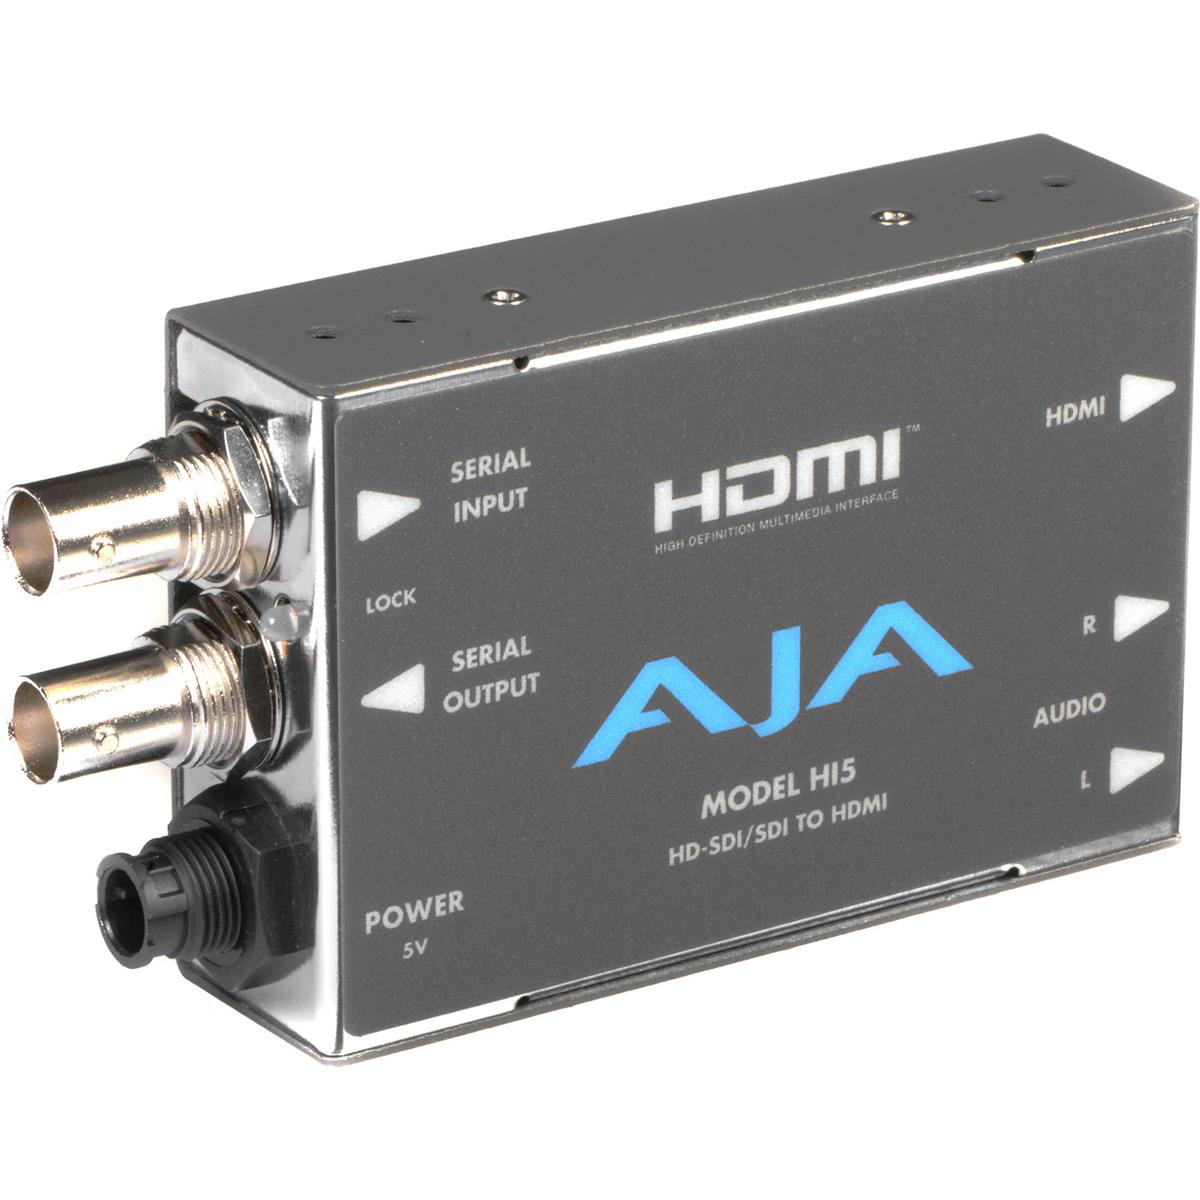 Image of AJA Hi5 HD-SDI /SDI to HDMI Video and Audio Converter